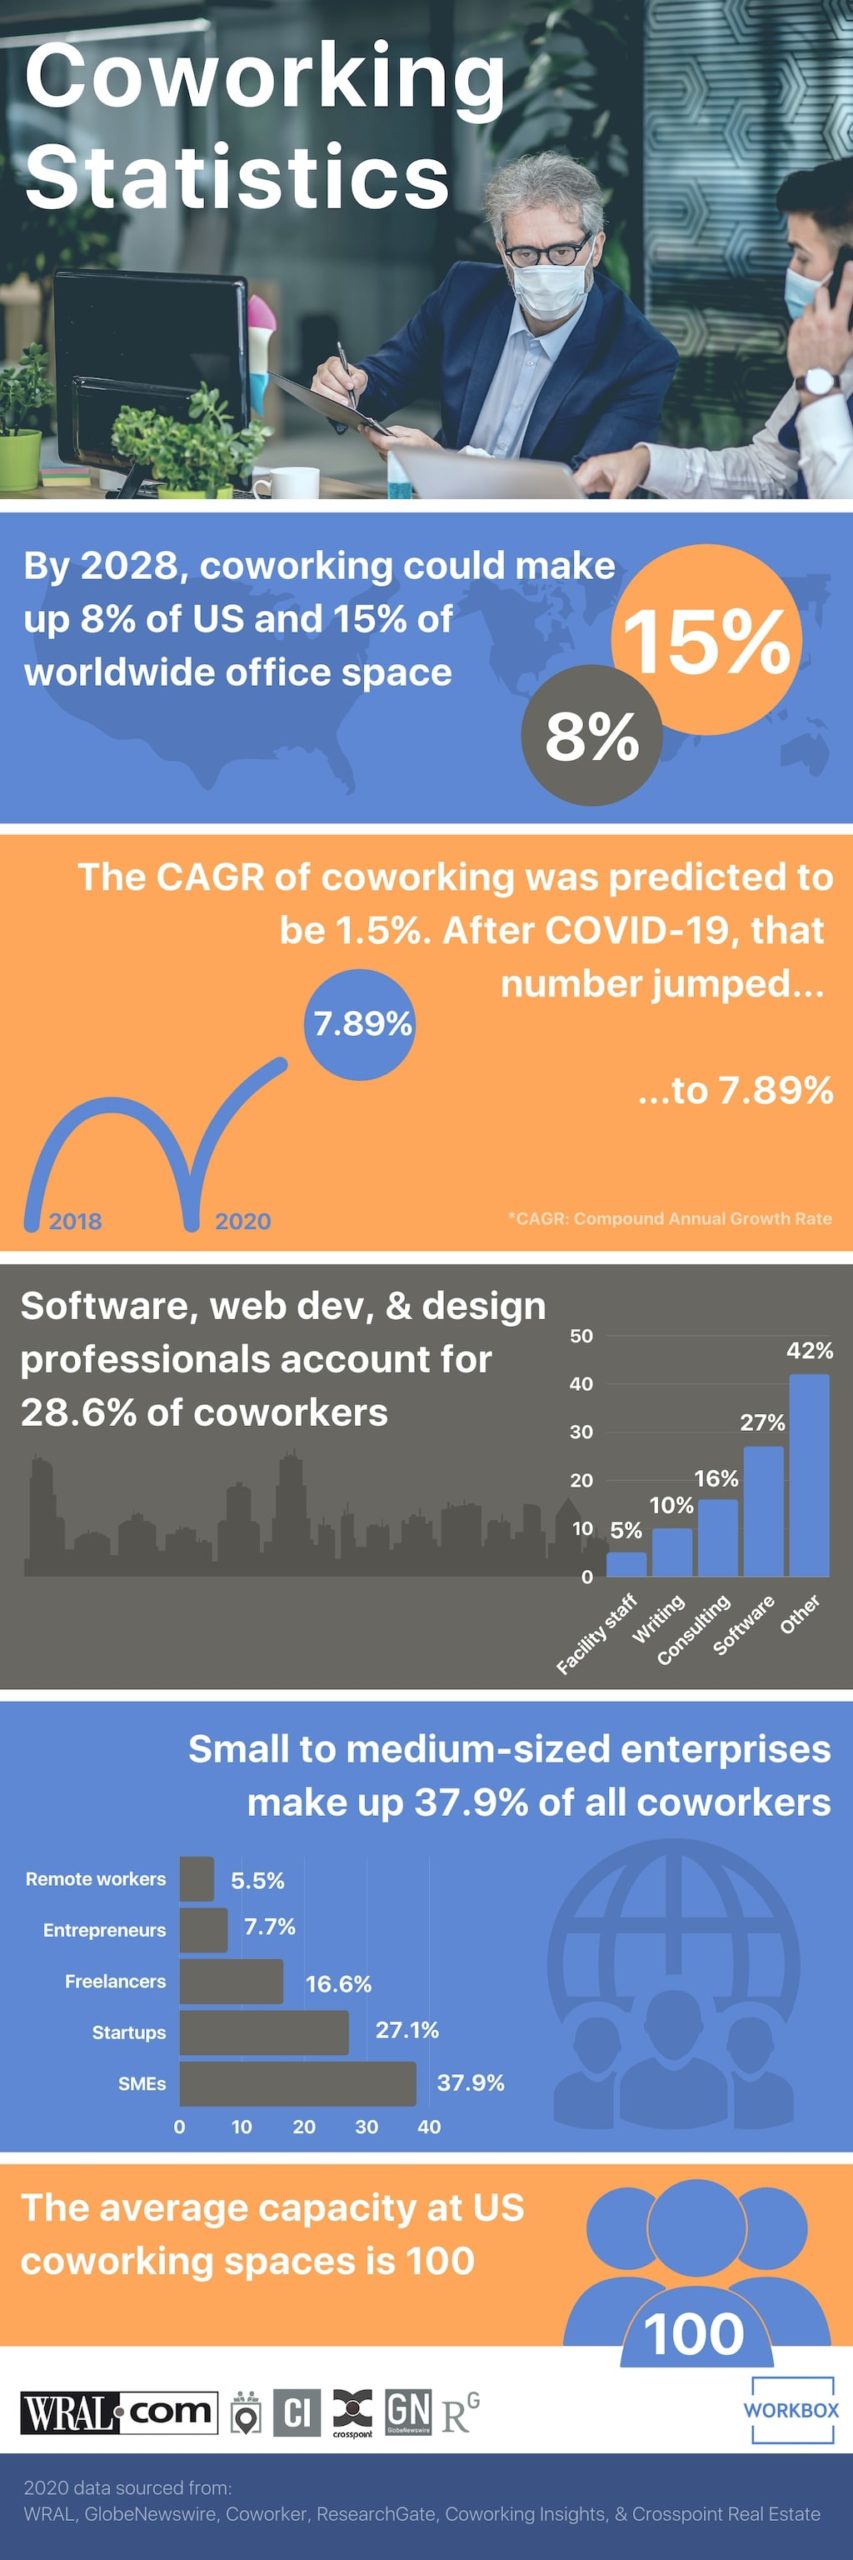 Coworking statistics infographic